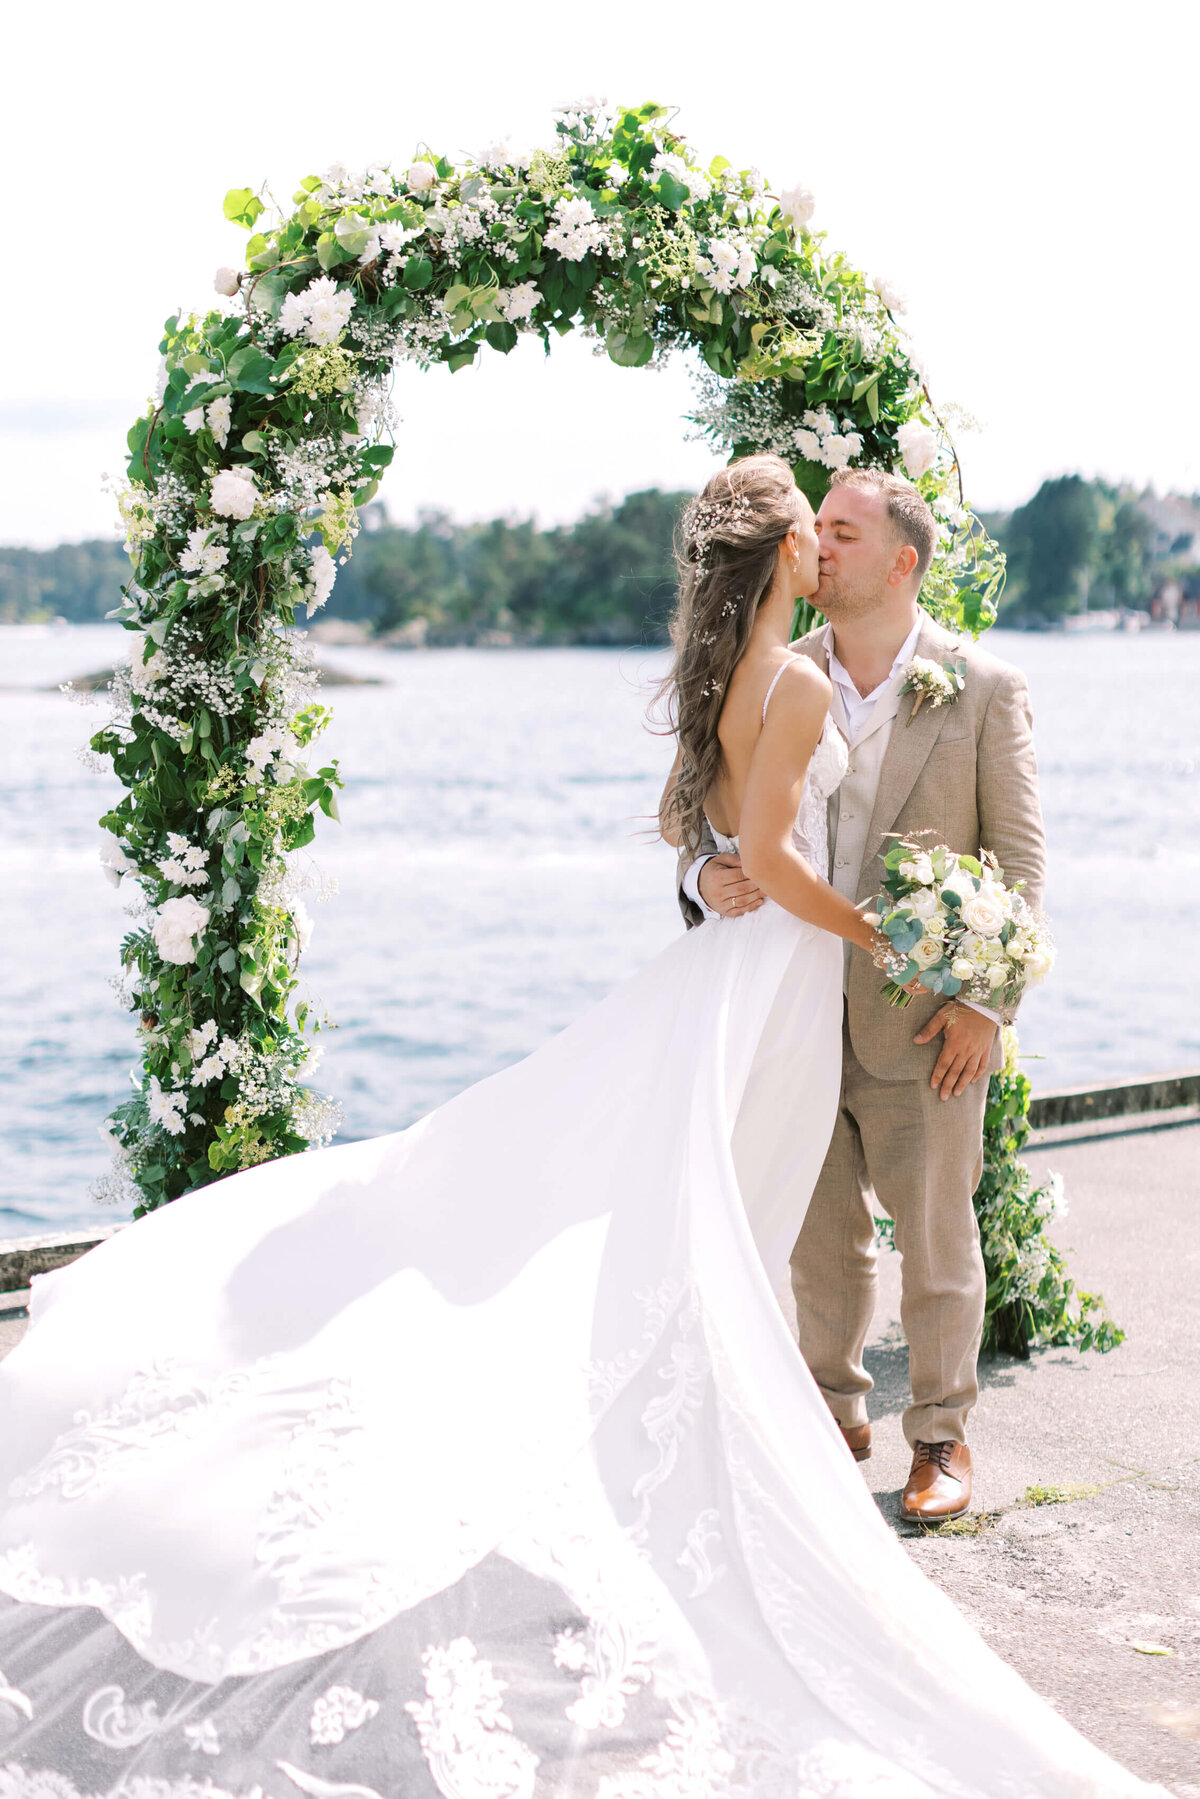 Lisa-Leanne-Photography_Bergen-Norway-Wedding_International-Wedding-Photographer_Destination-Wedding-Photographer_38